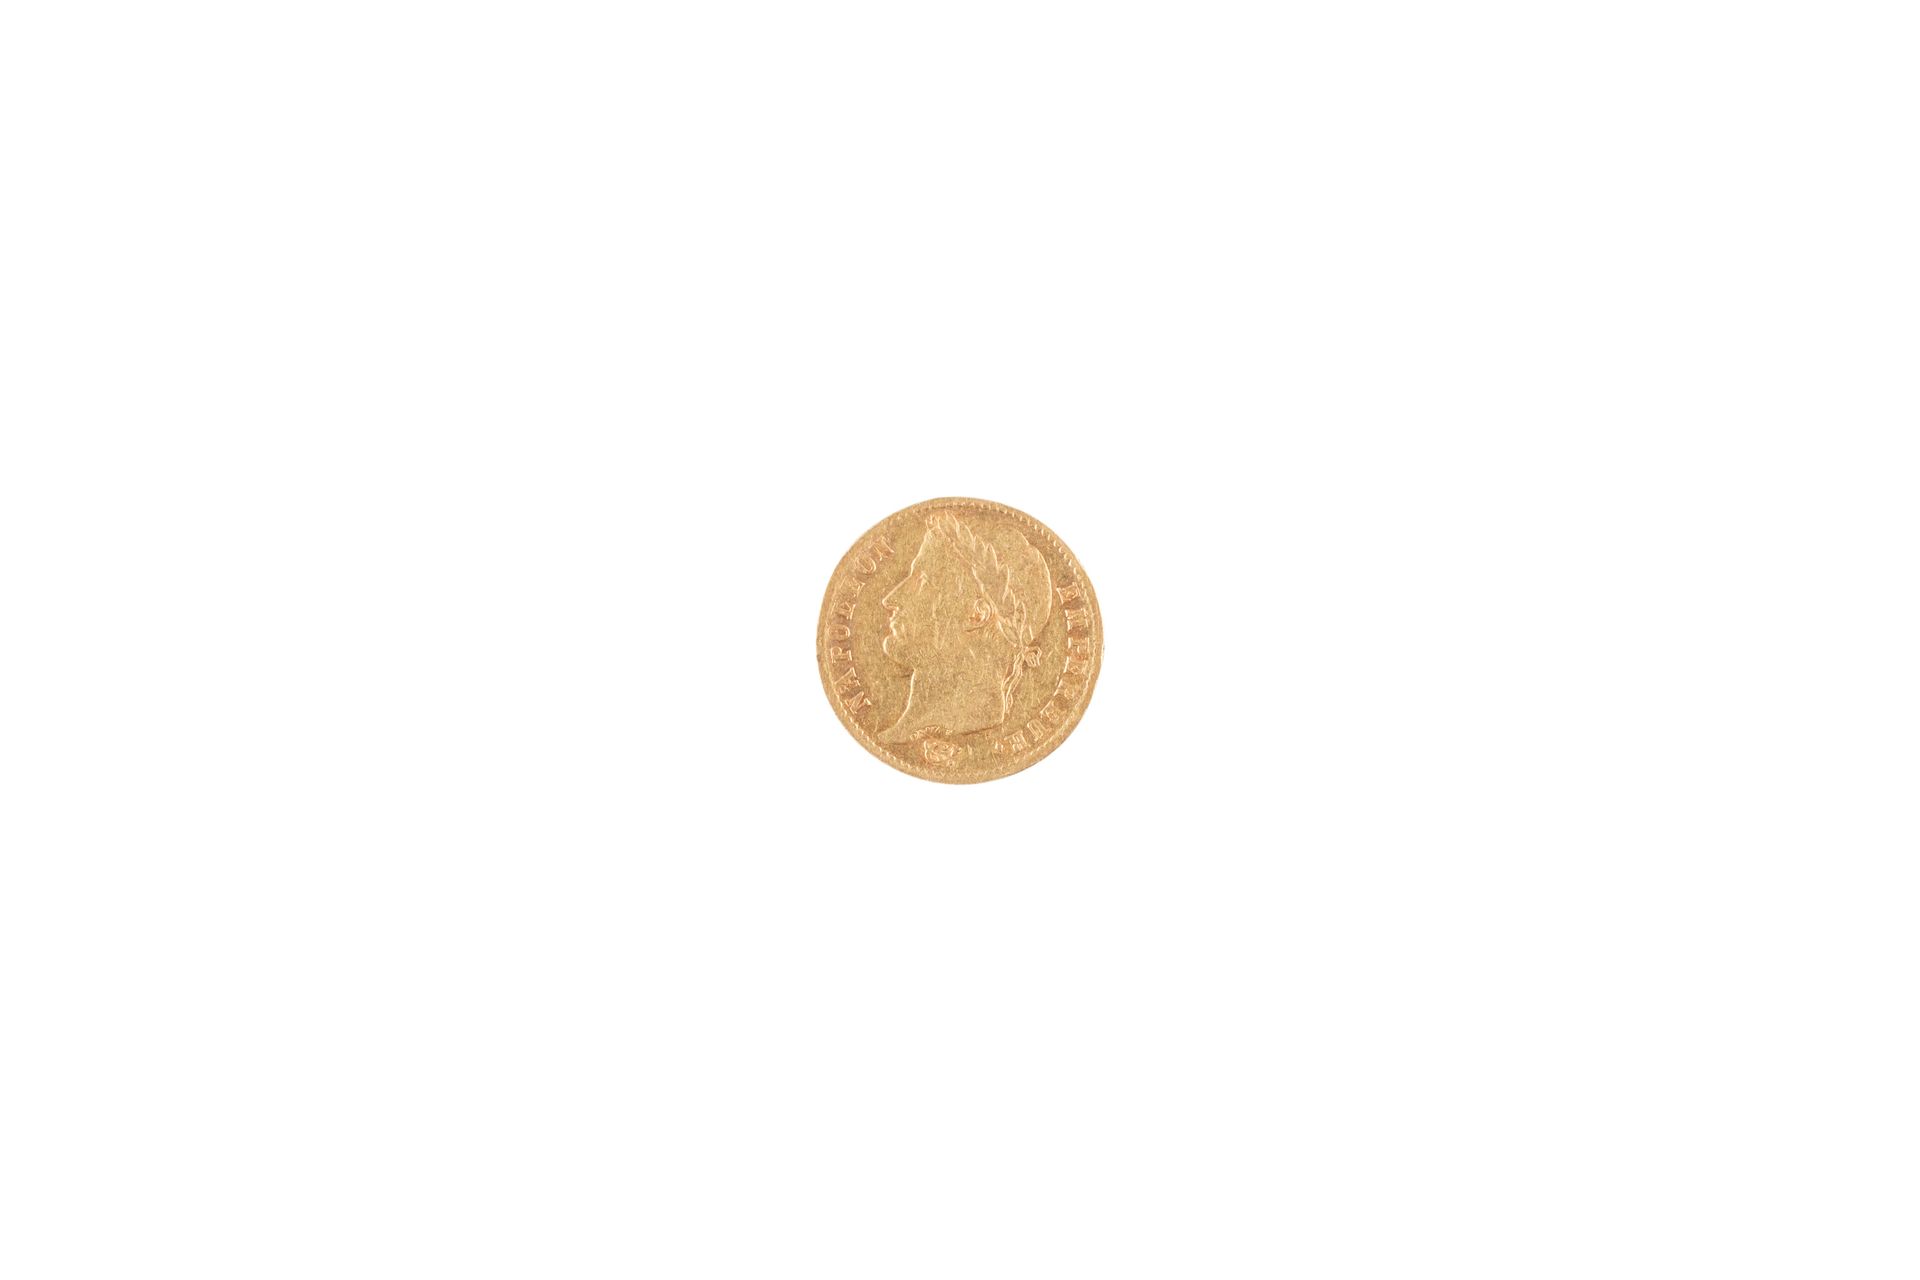 Null 20 Goldfranken 1811 A Paris, 6,41 gr. G. 1025

TTB